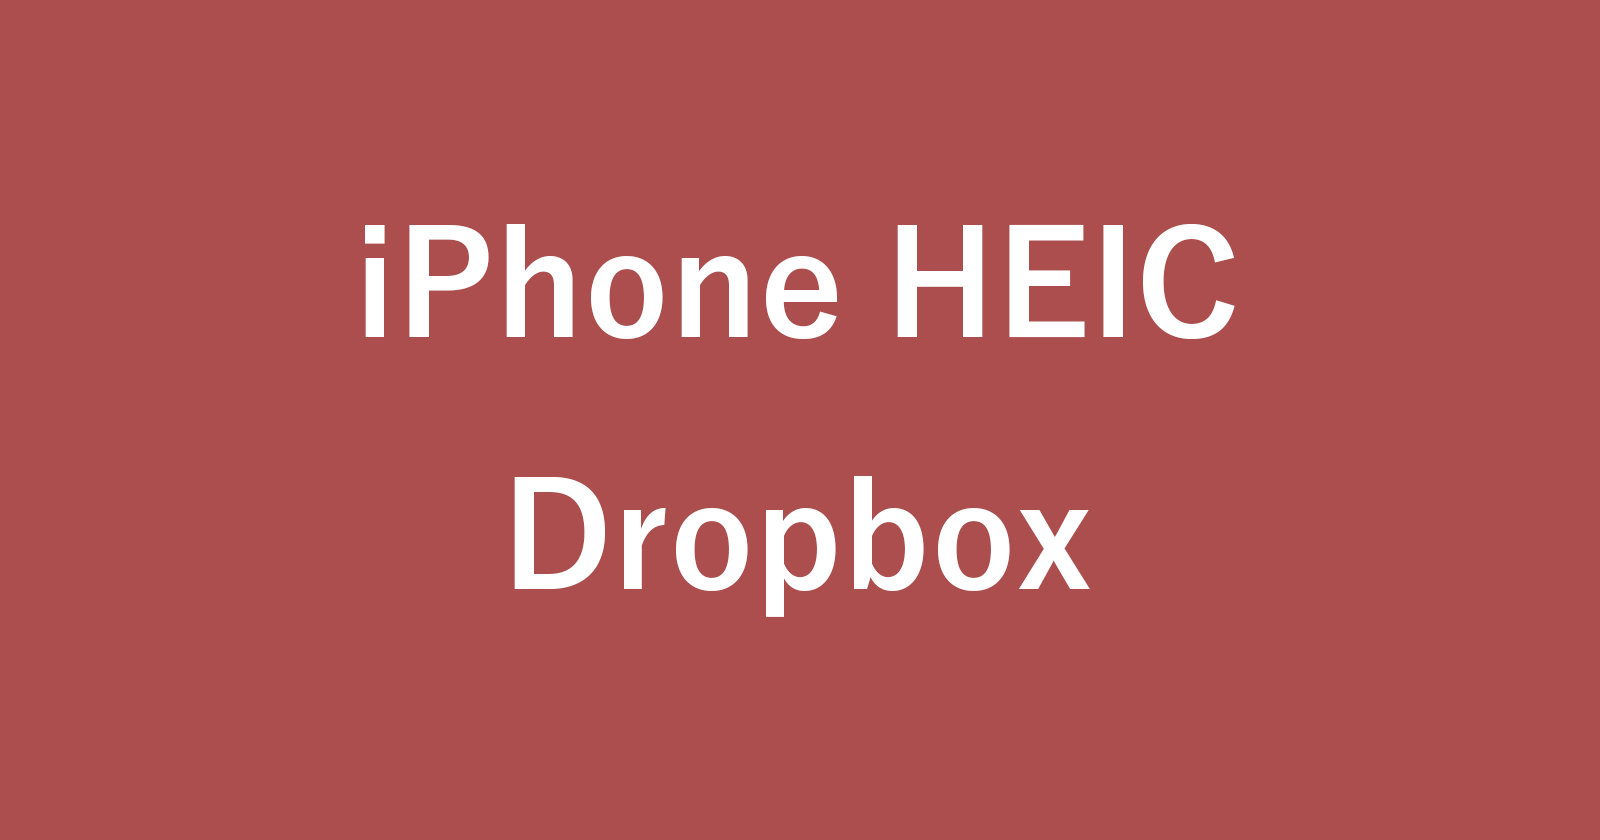 iphone camera heic dropbox